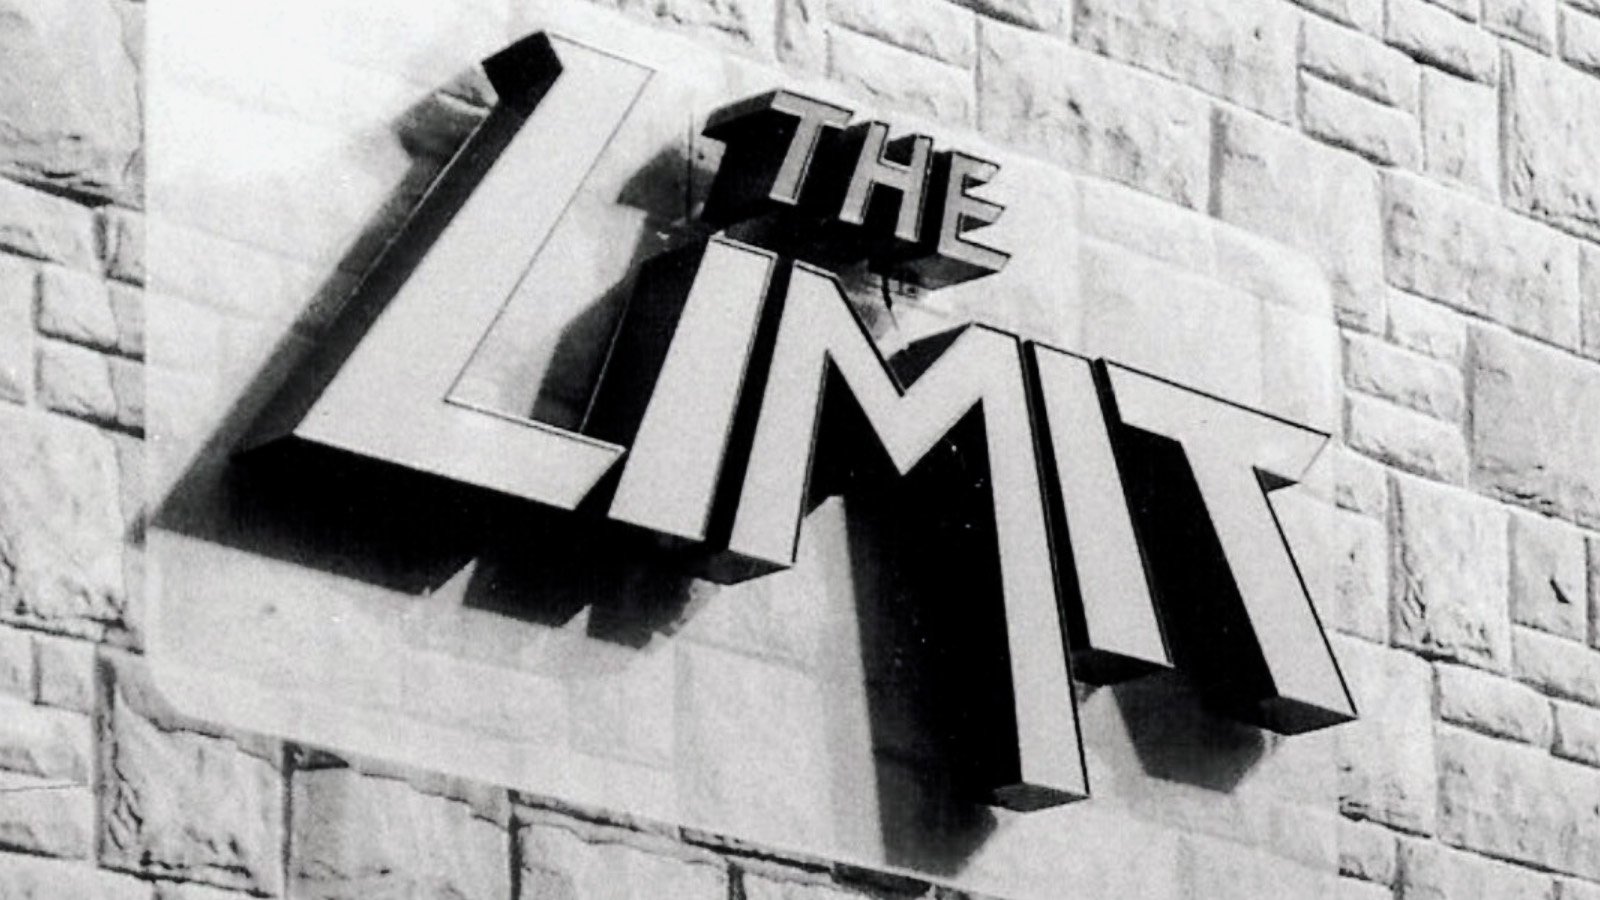 The Limit Nightclub Sign